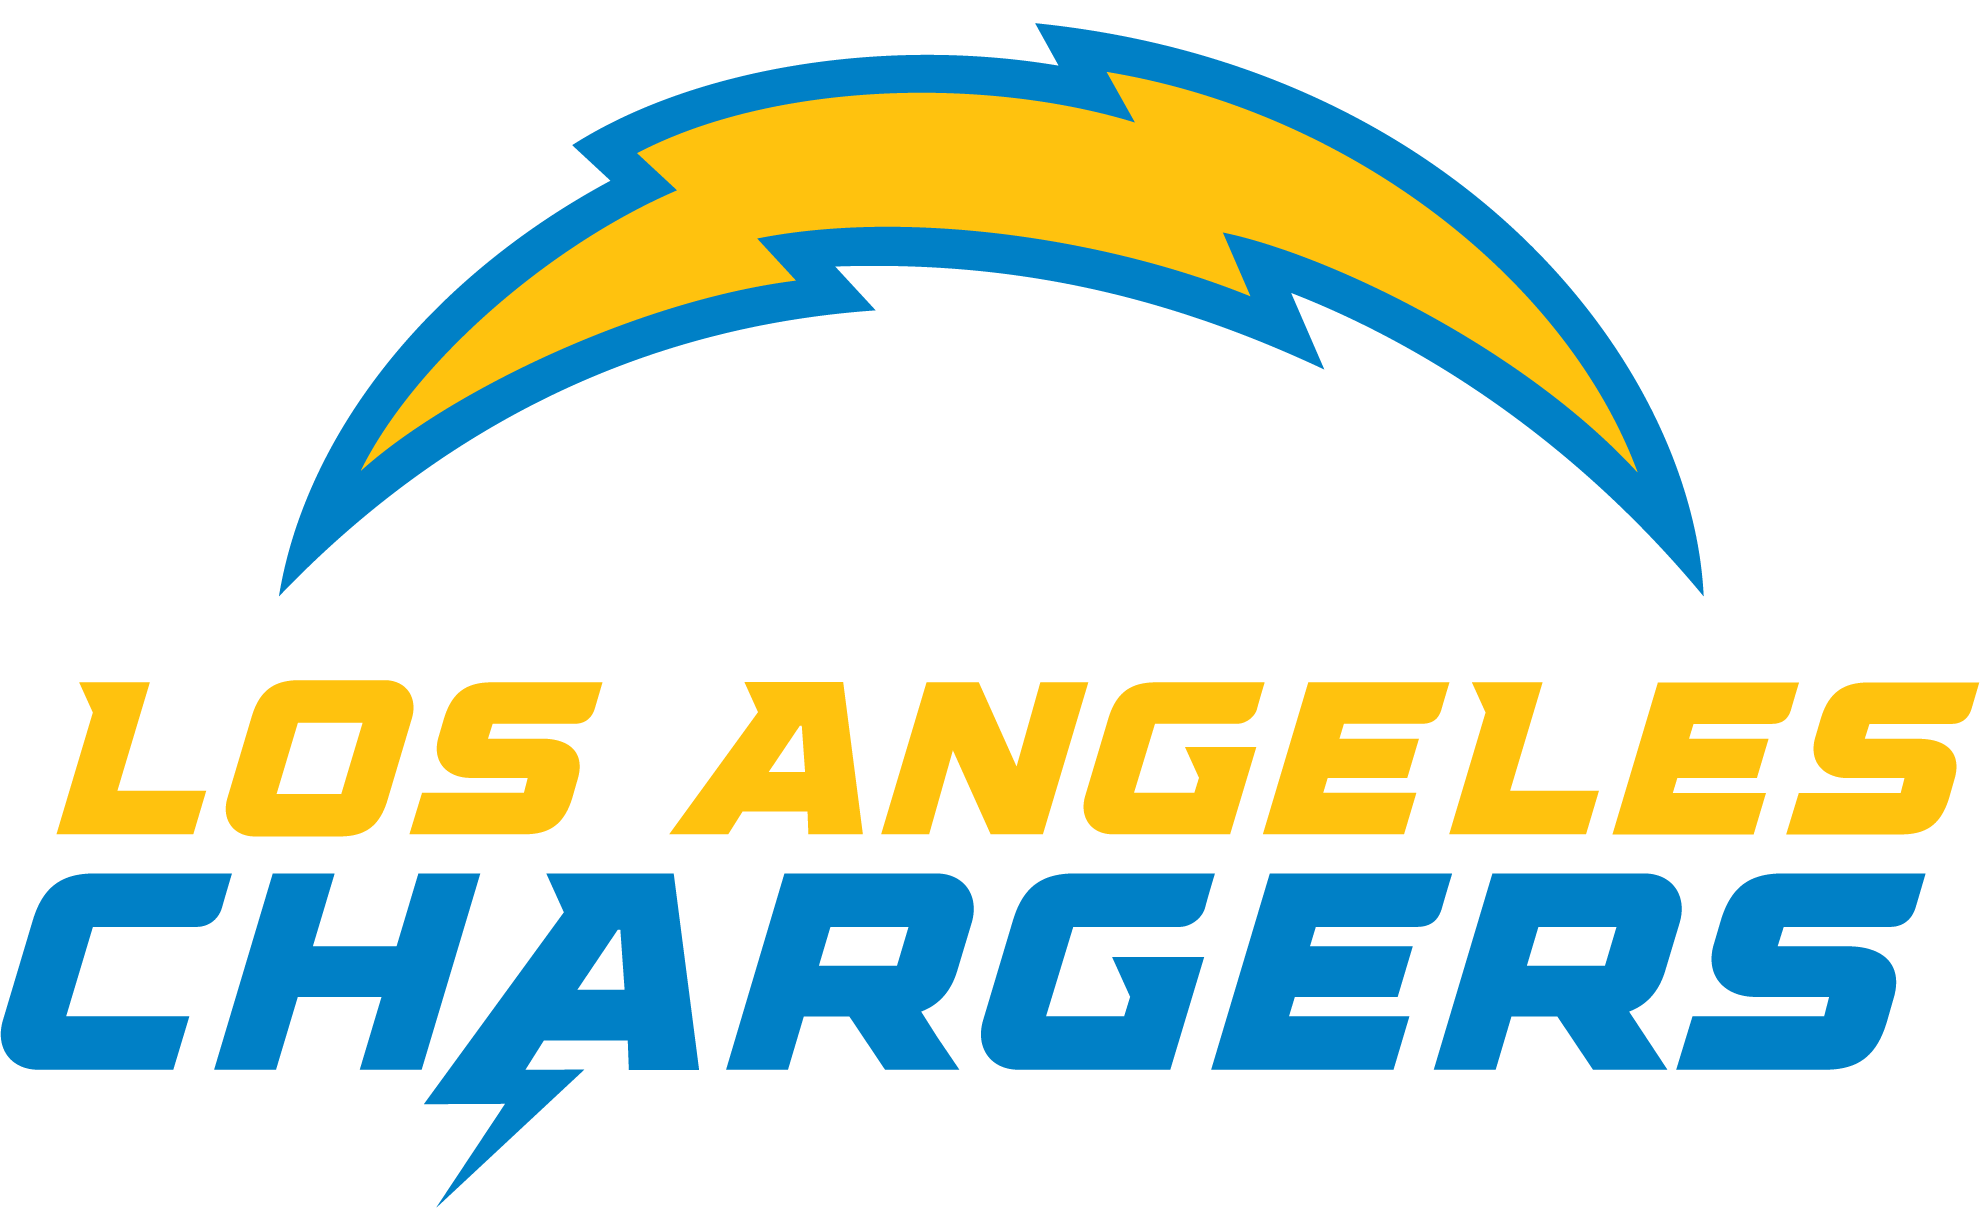 LA Chargers logo